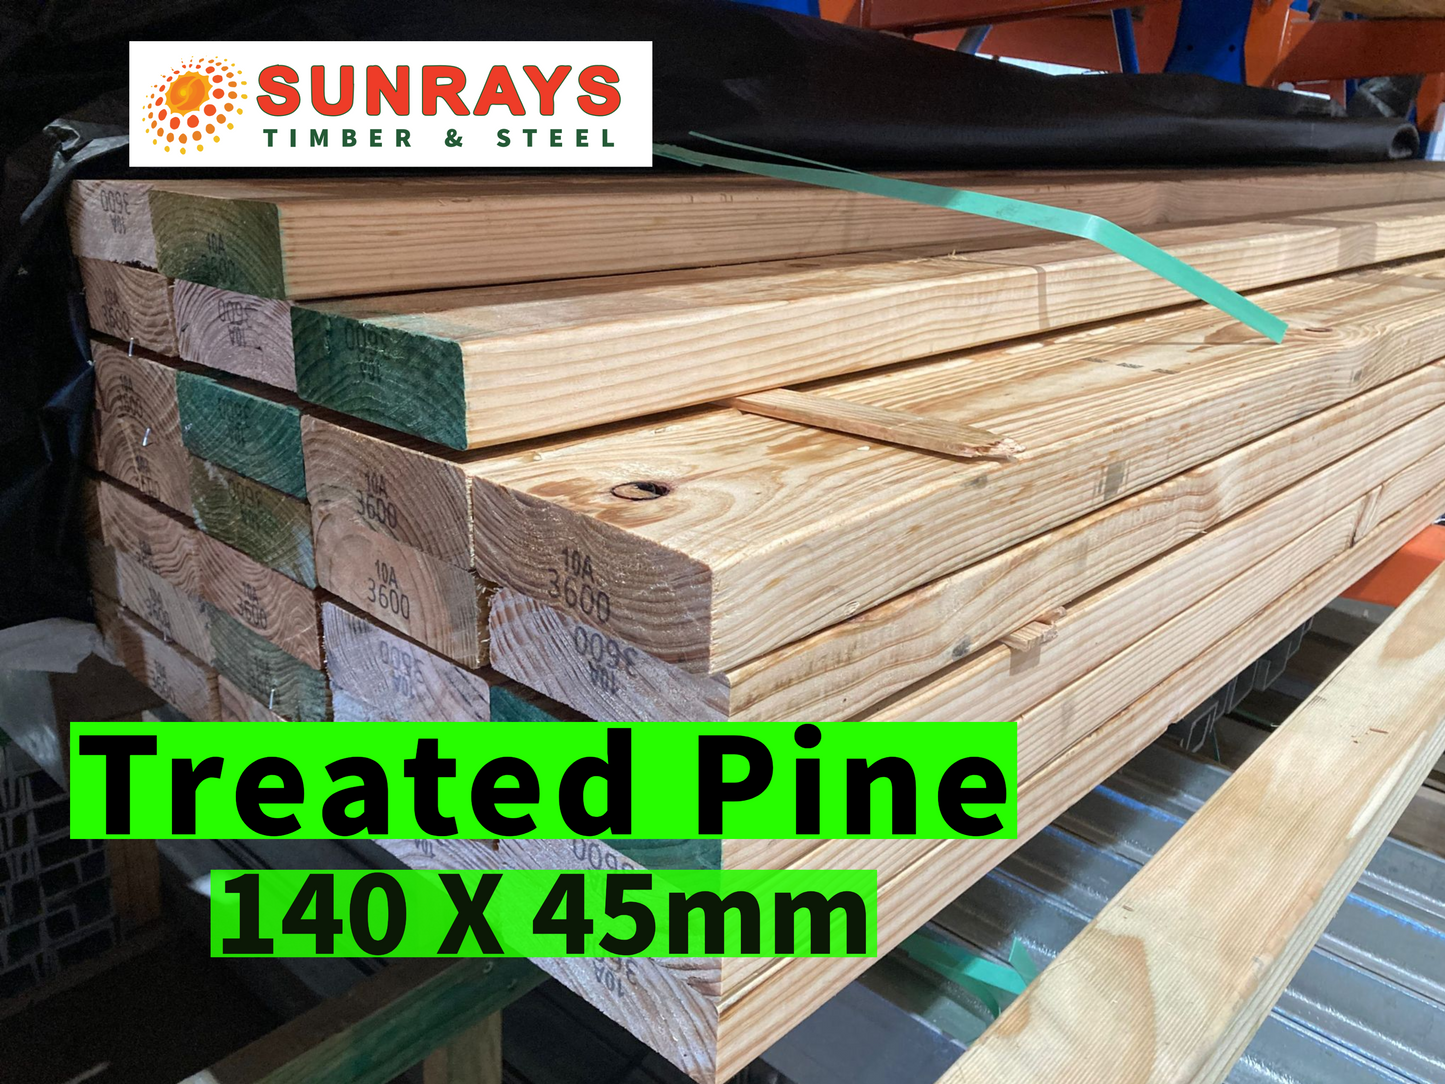 Treated Pine - 140 x 45 mm